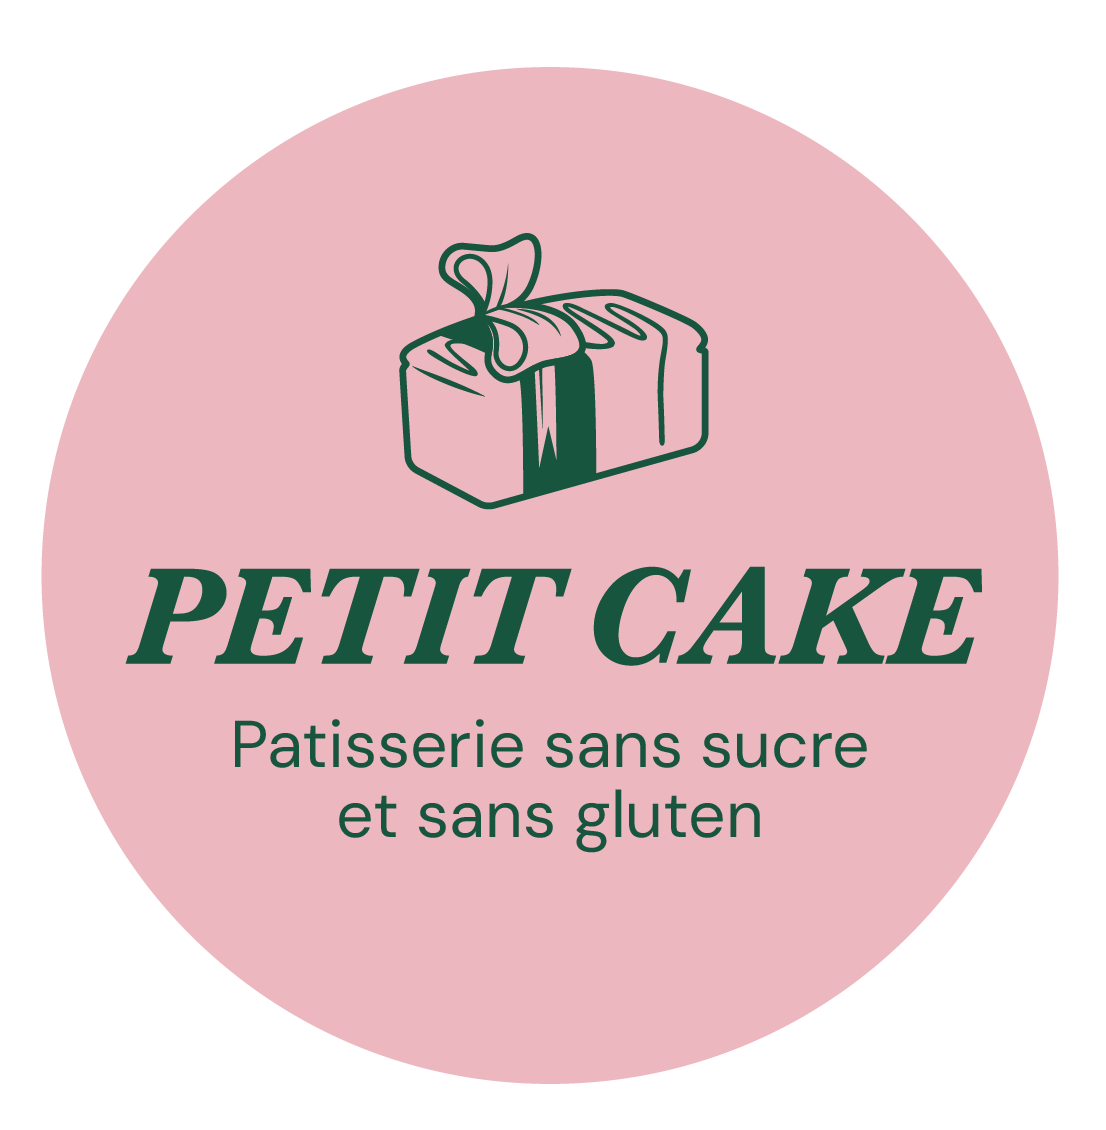 Petit cake mtl